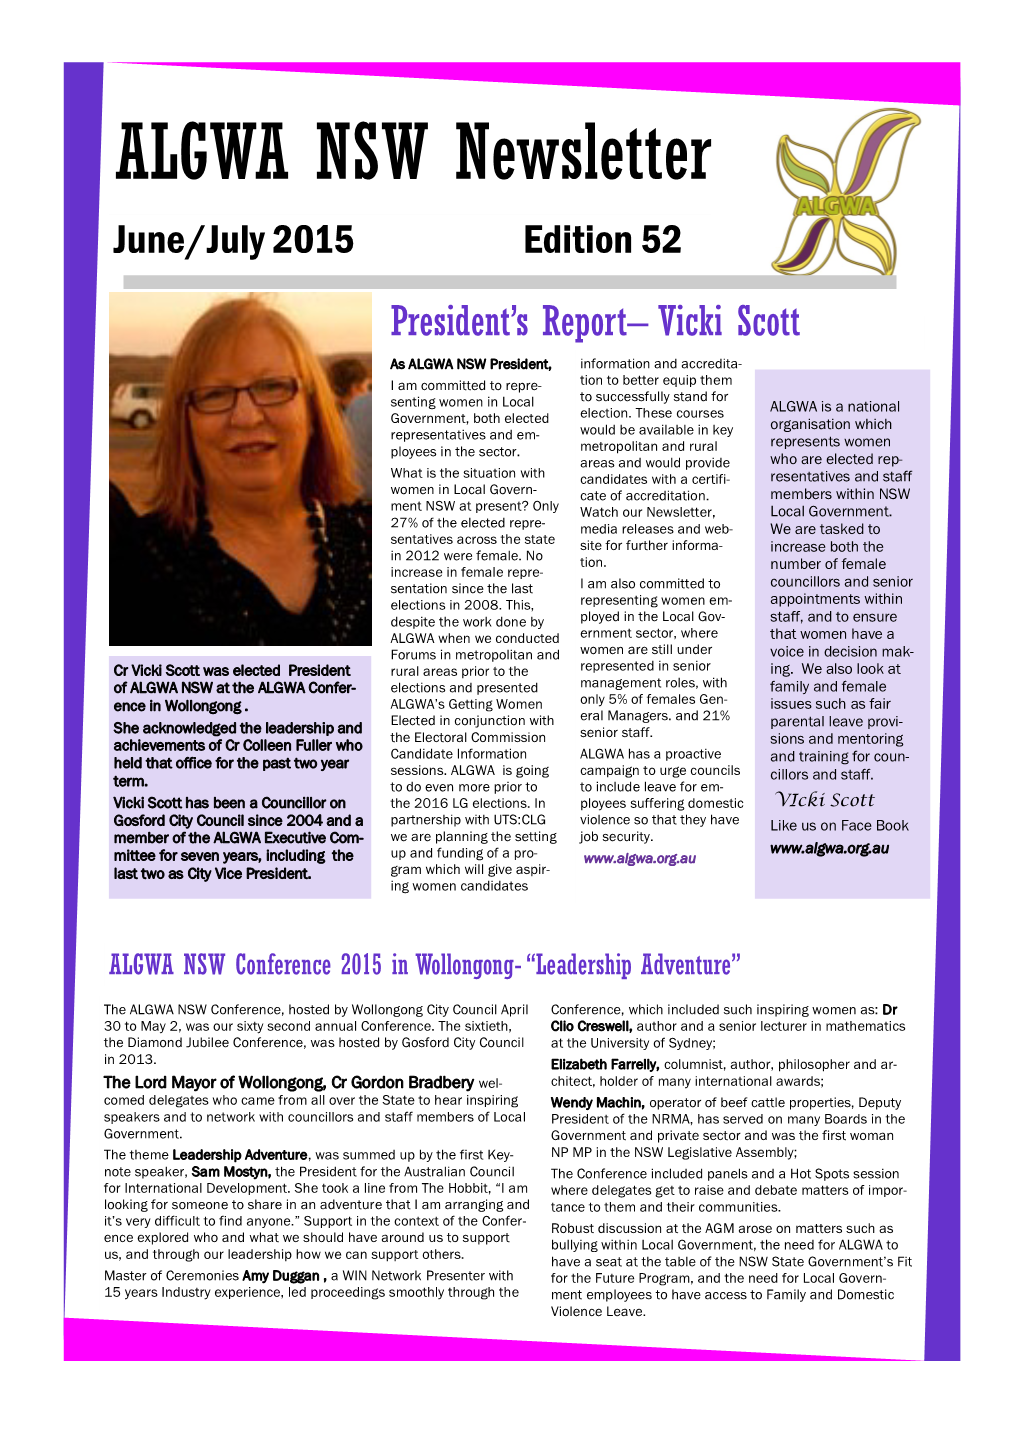 ALGWA NSW Newsletter June/July 2015 Edition 52